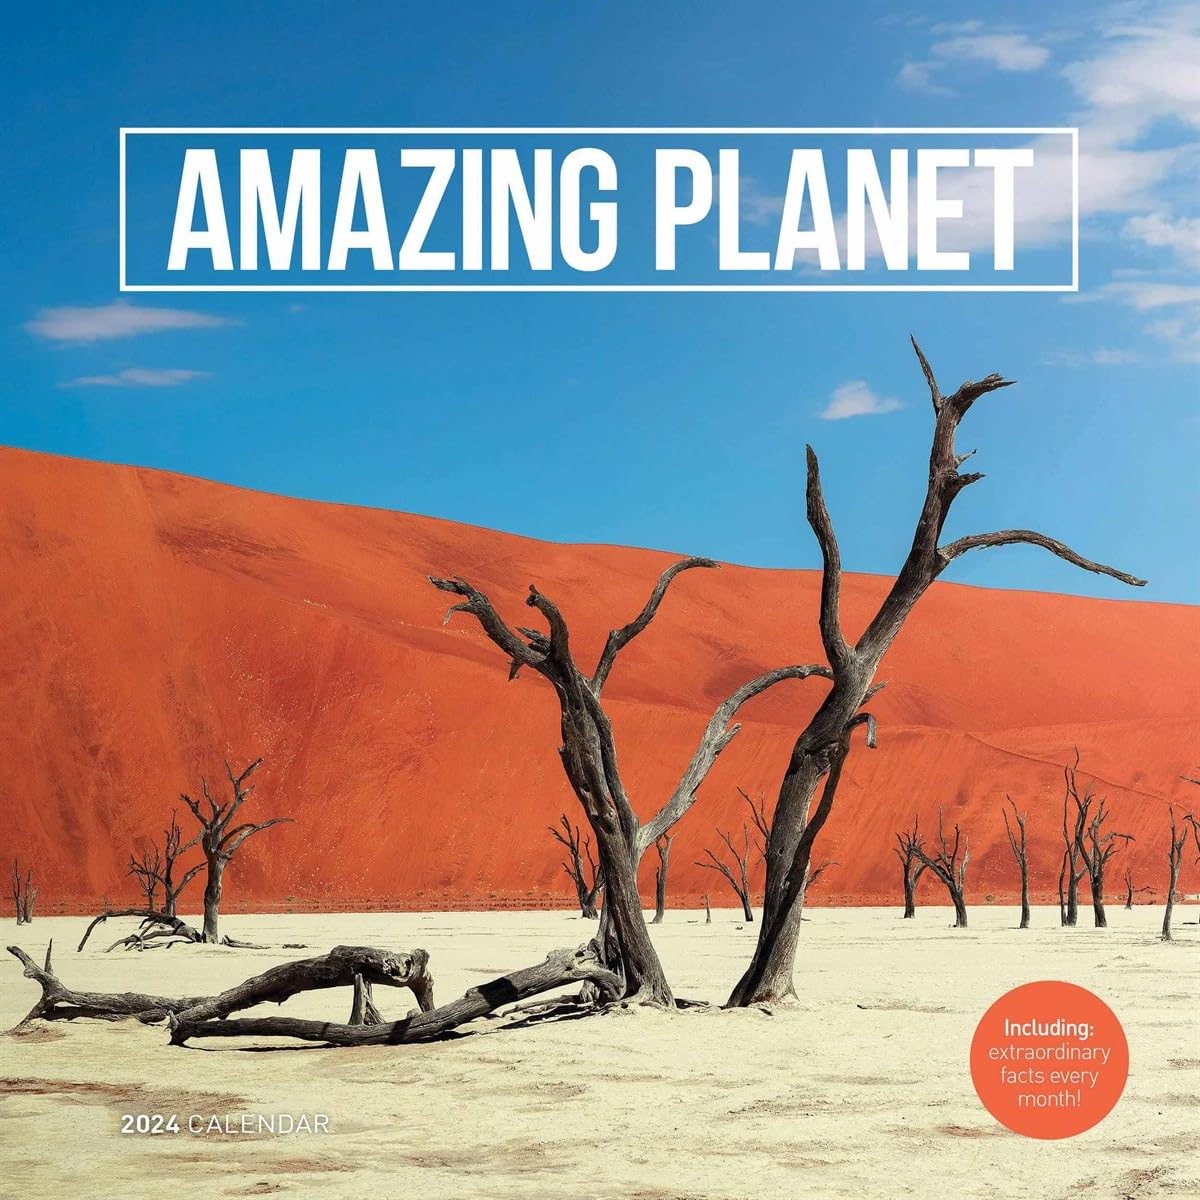 Calendar 2024 - Amazing Planet | Carousel